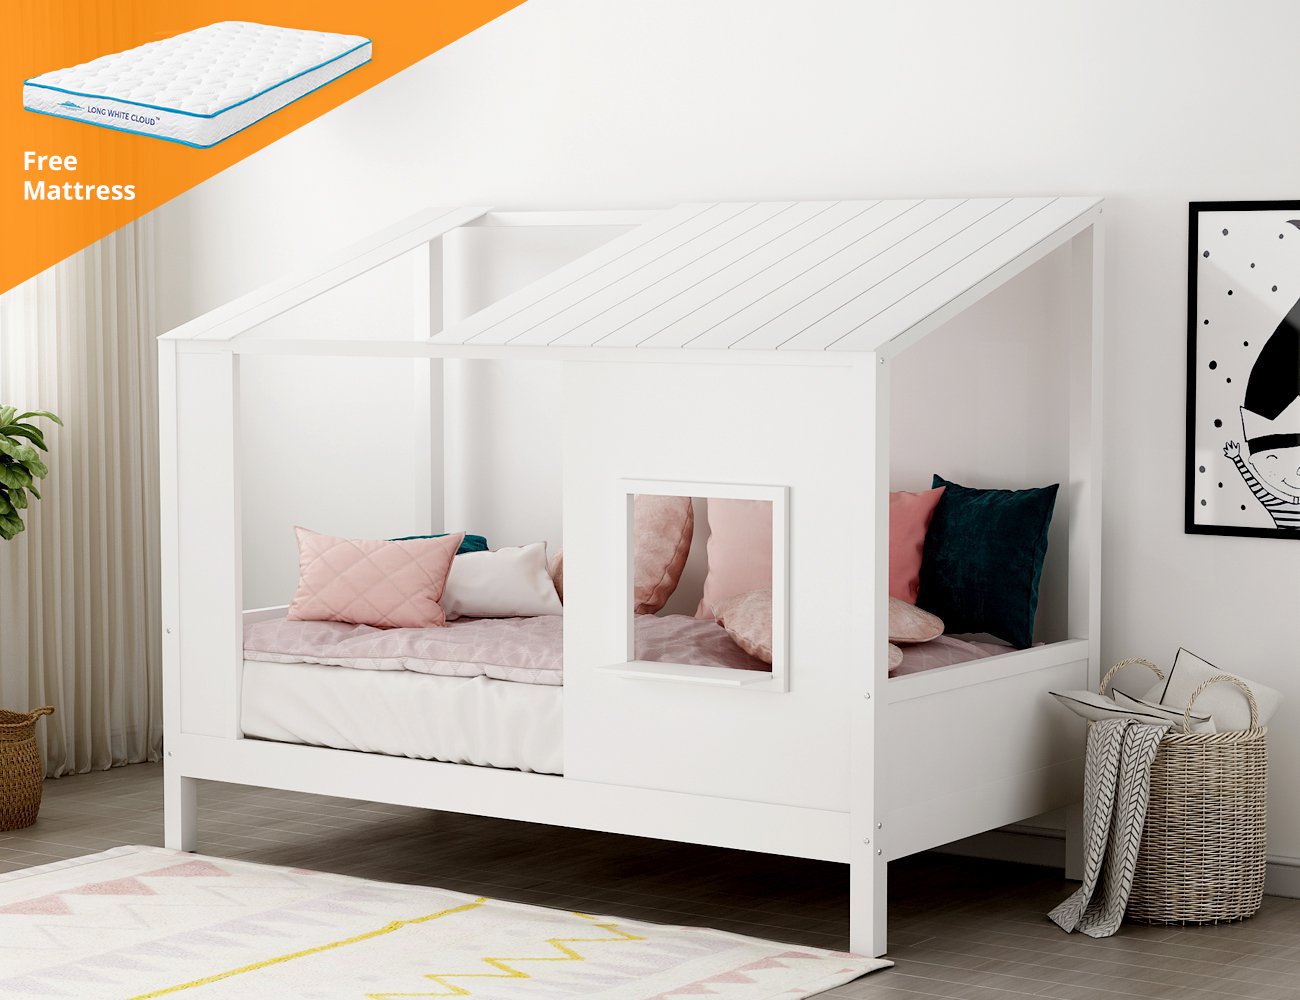 bed frame and mattress set